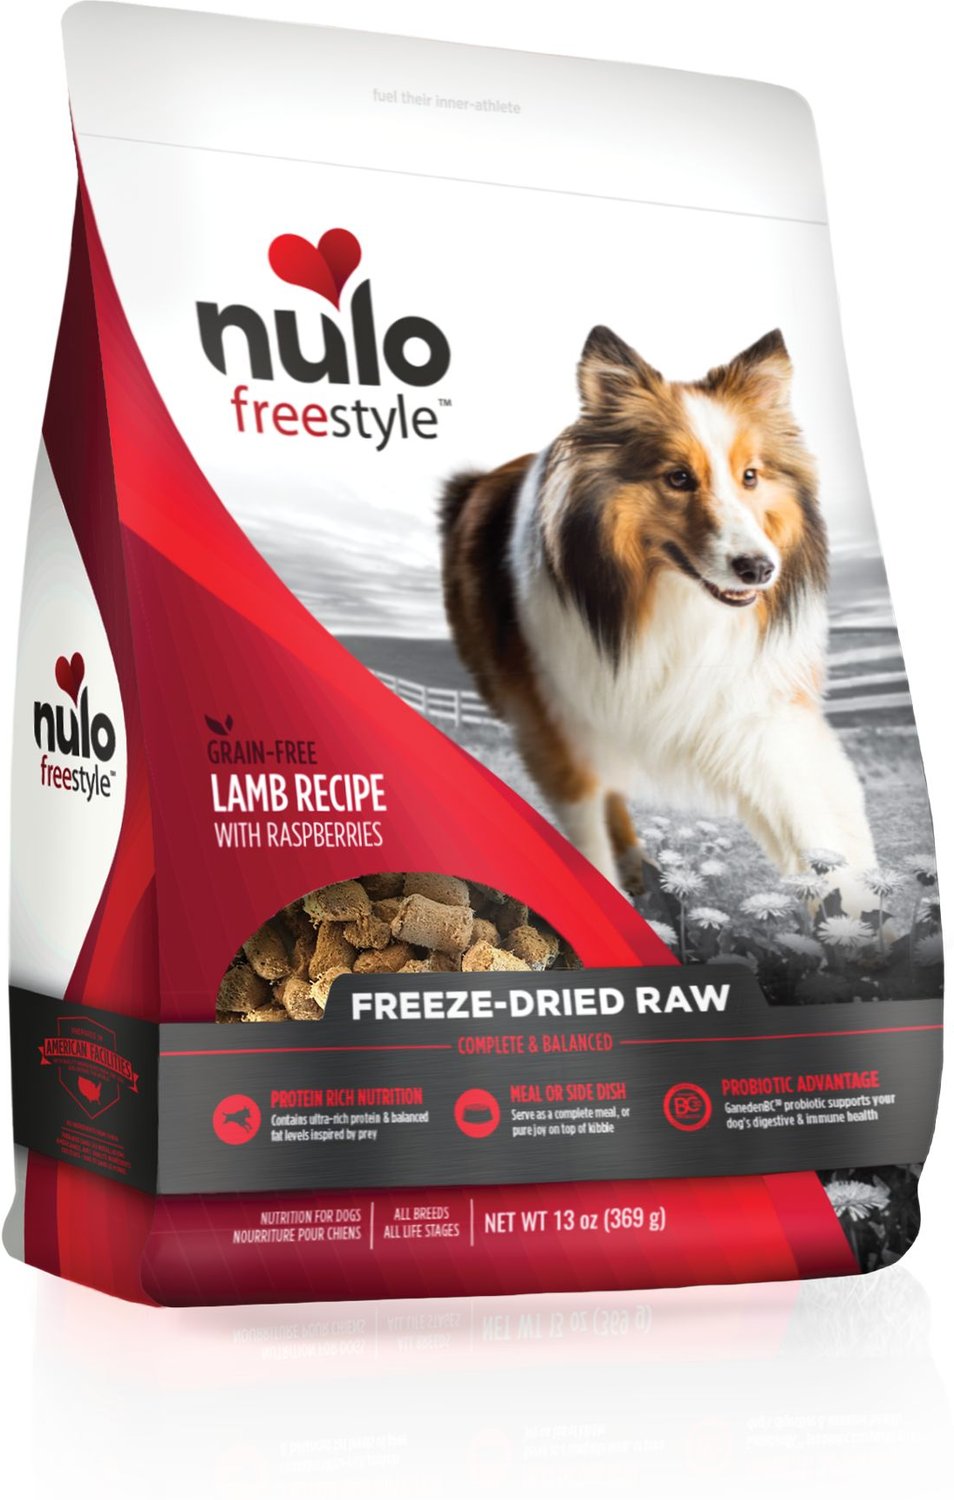 Nulo Freestyle Lamb Recipe With Raspberries Grain-Free Freeze-Dried Raw